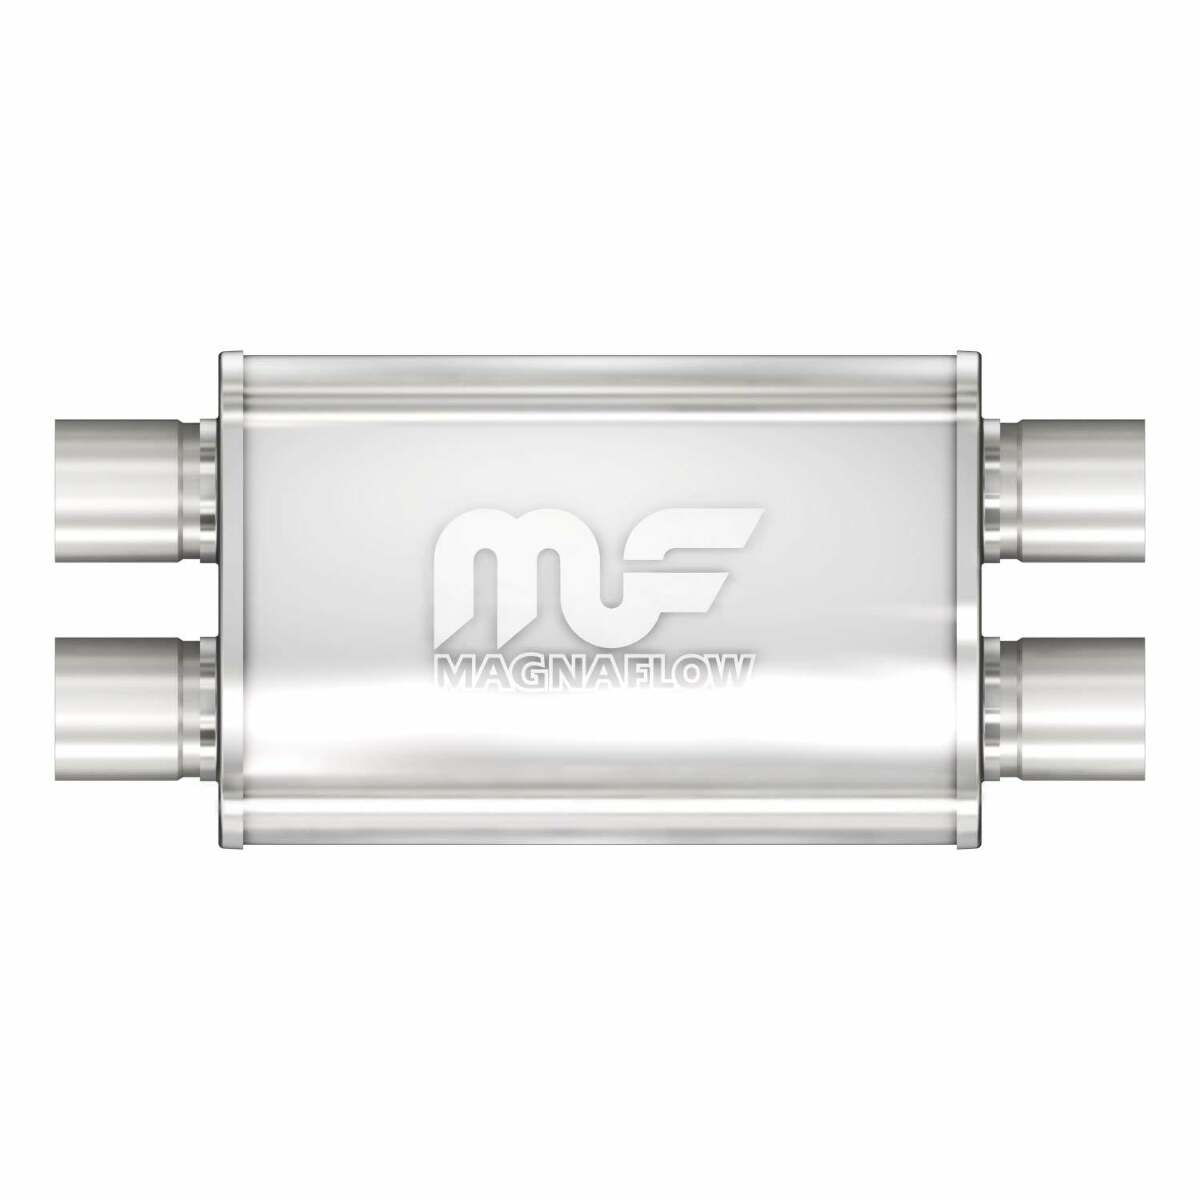 Magnaflow Performance Exhaust 11385 Stainless Steel Muffler 11385 Magnaflow